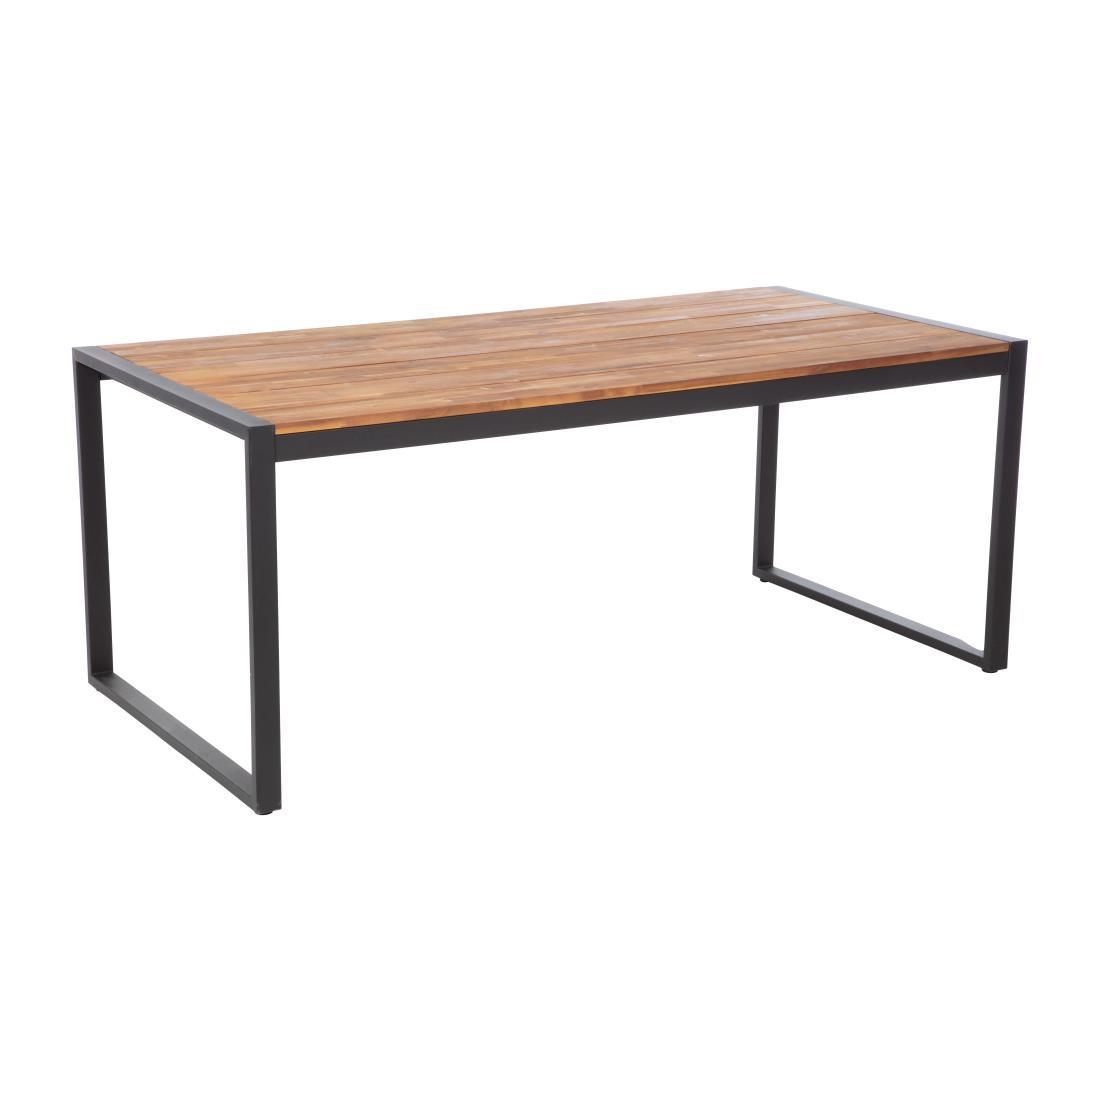 Bolero Acacia Wood and Steel Rectangular Industrial Table 1800mm - DS157  - 3